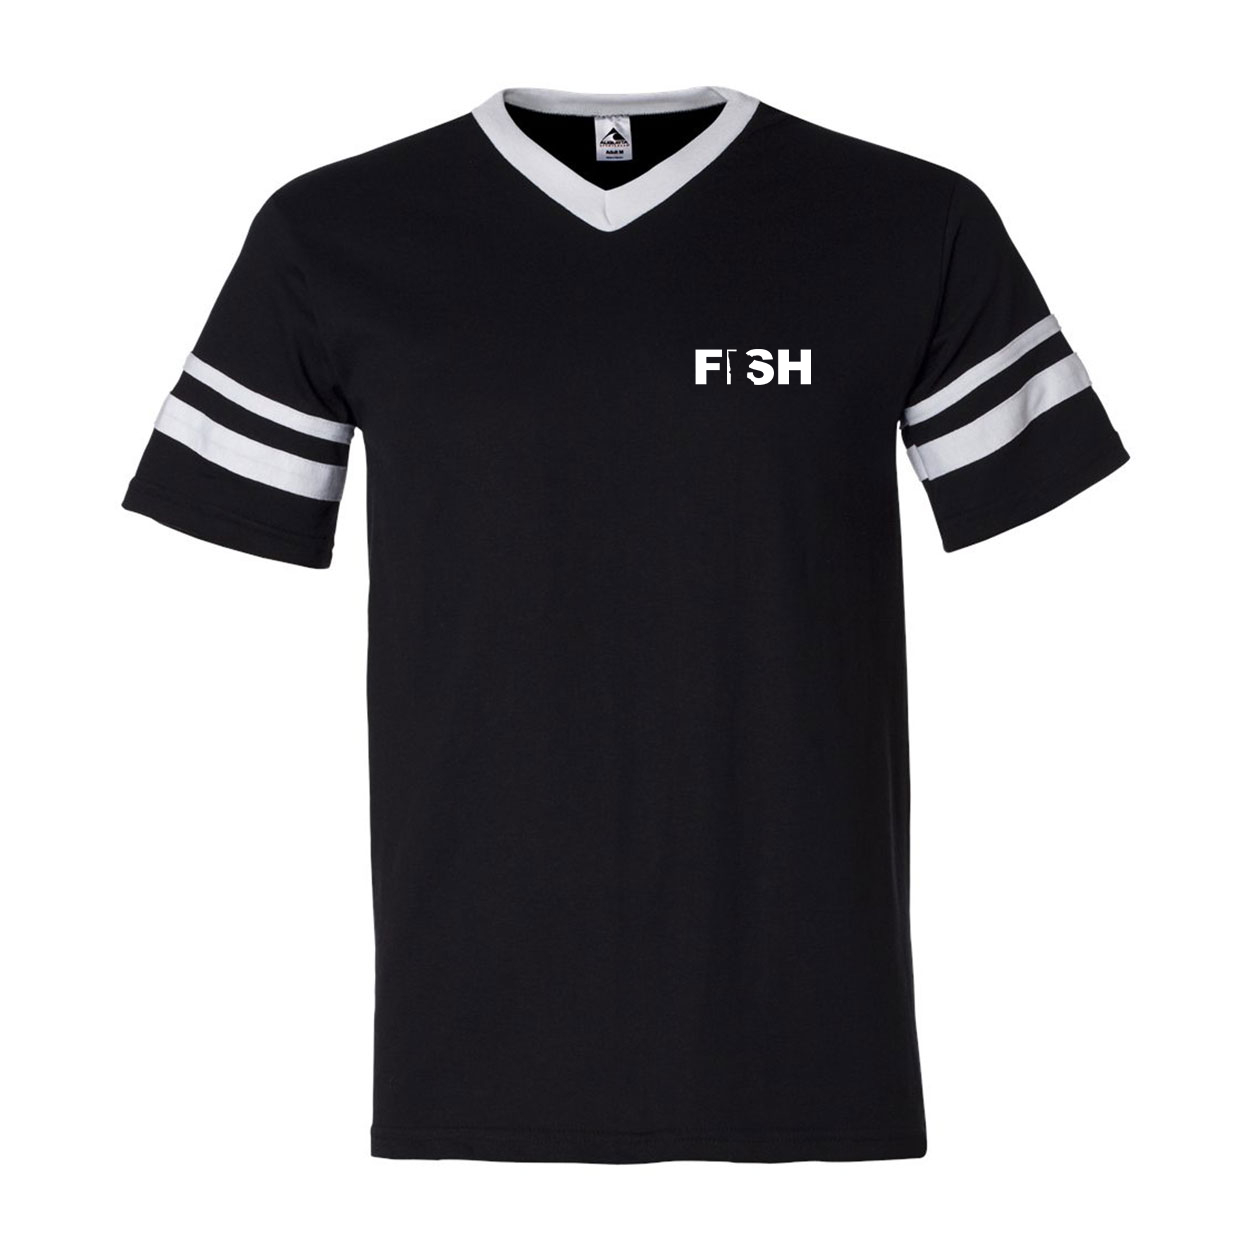 Fish Minnesota Night Out Premium Striped Jersey T-Shirt Black/White (White Logo)